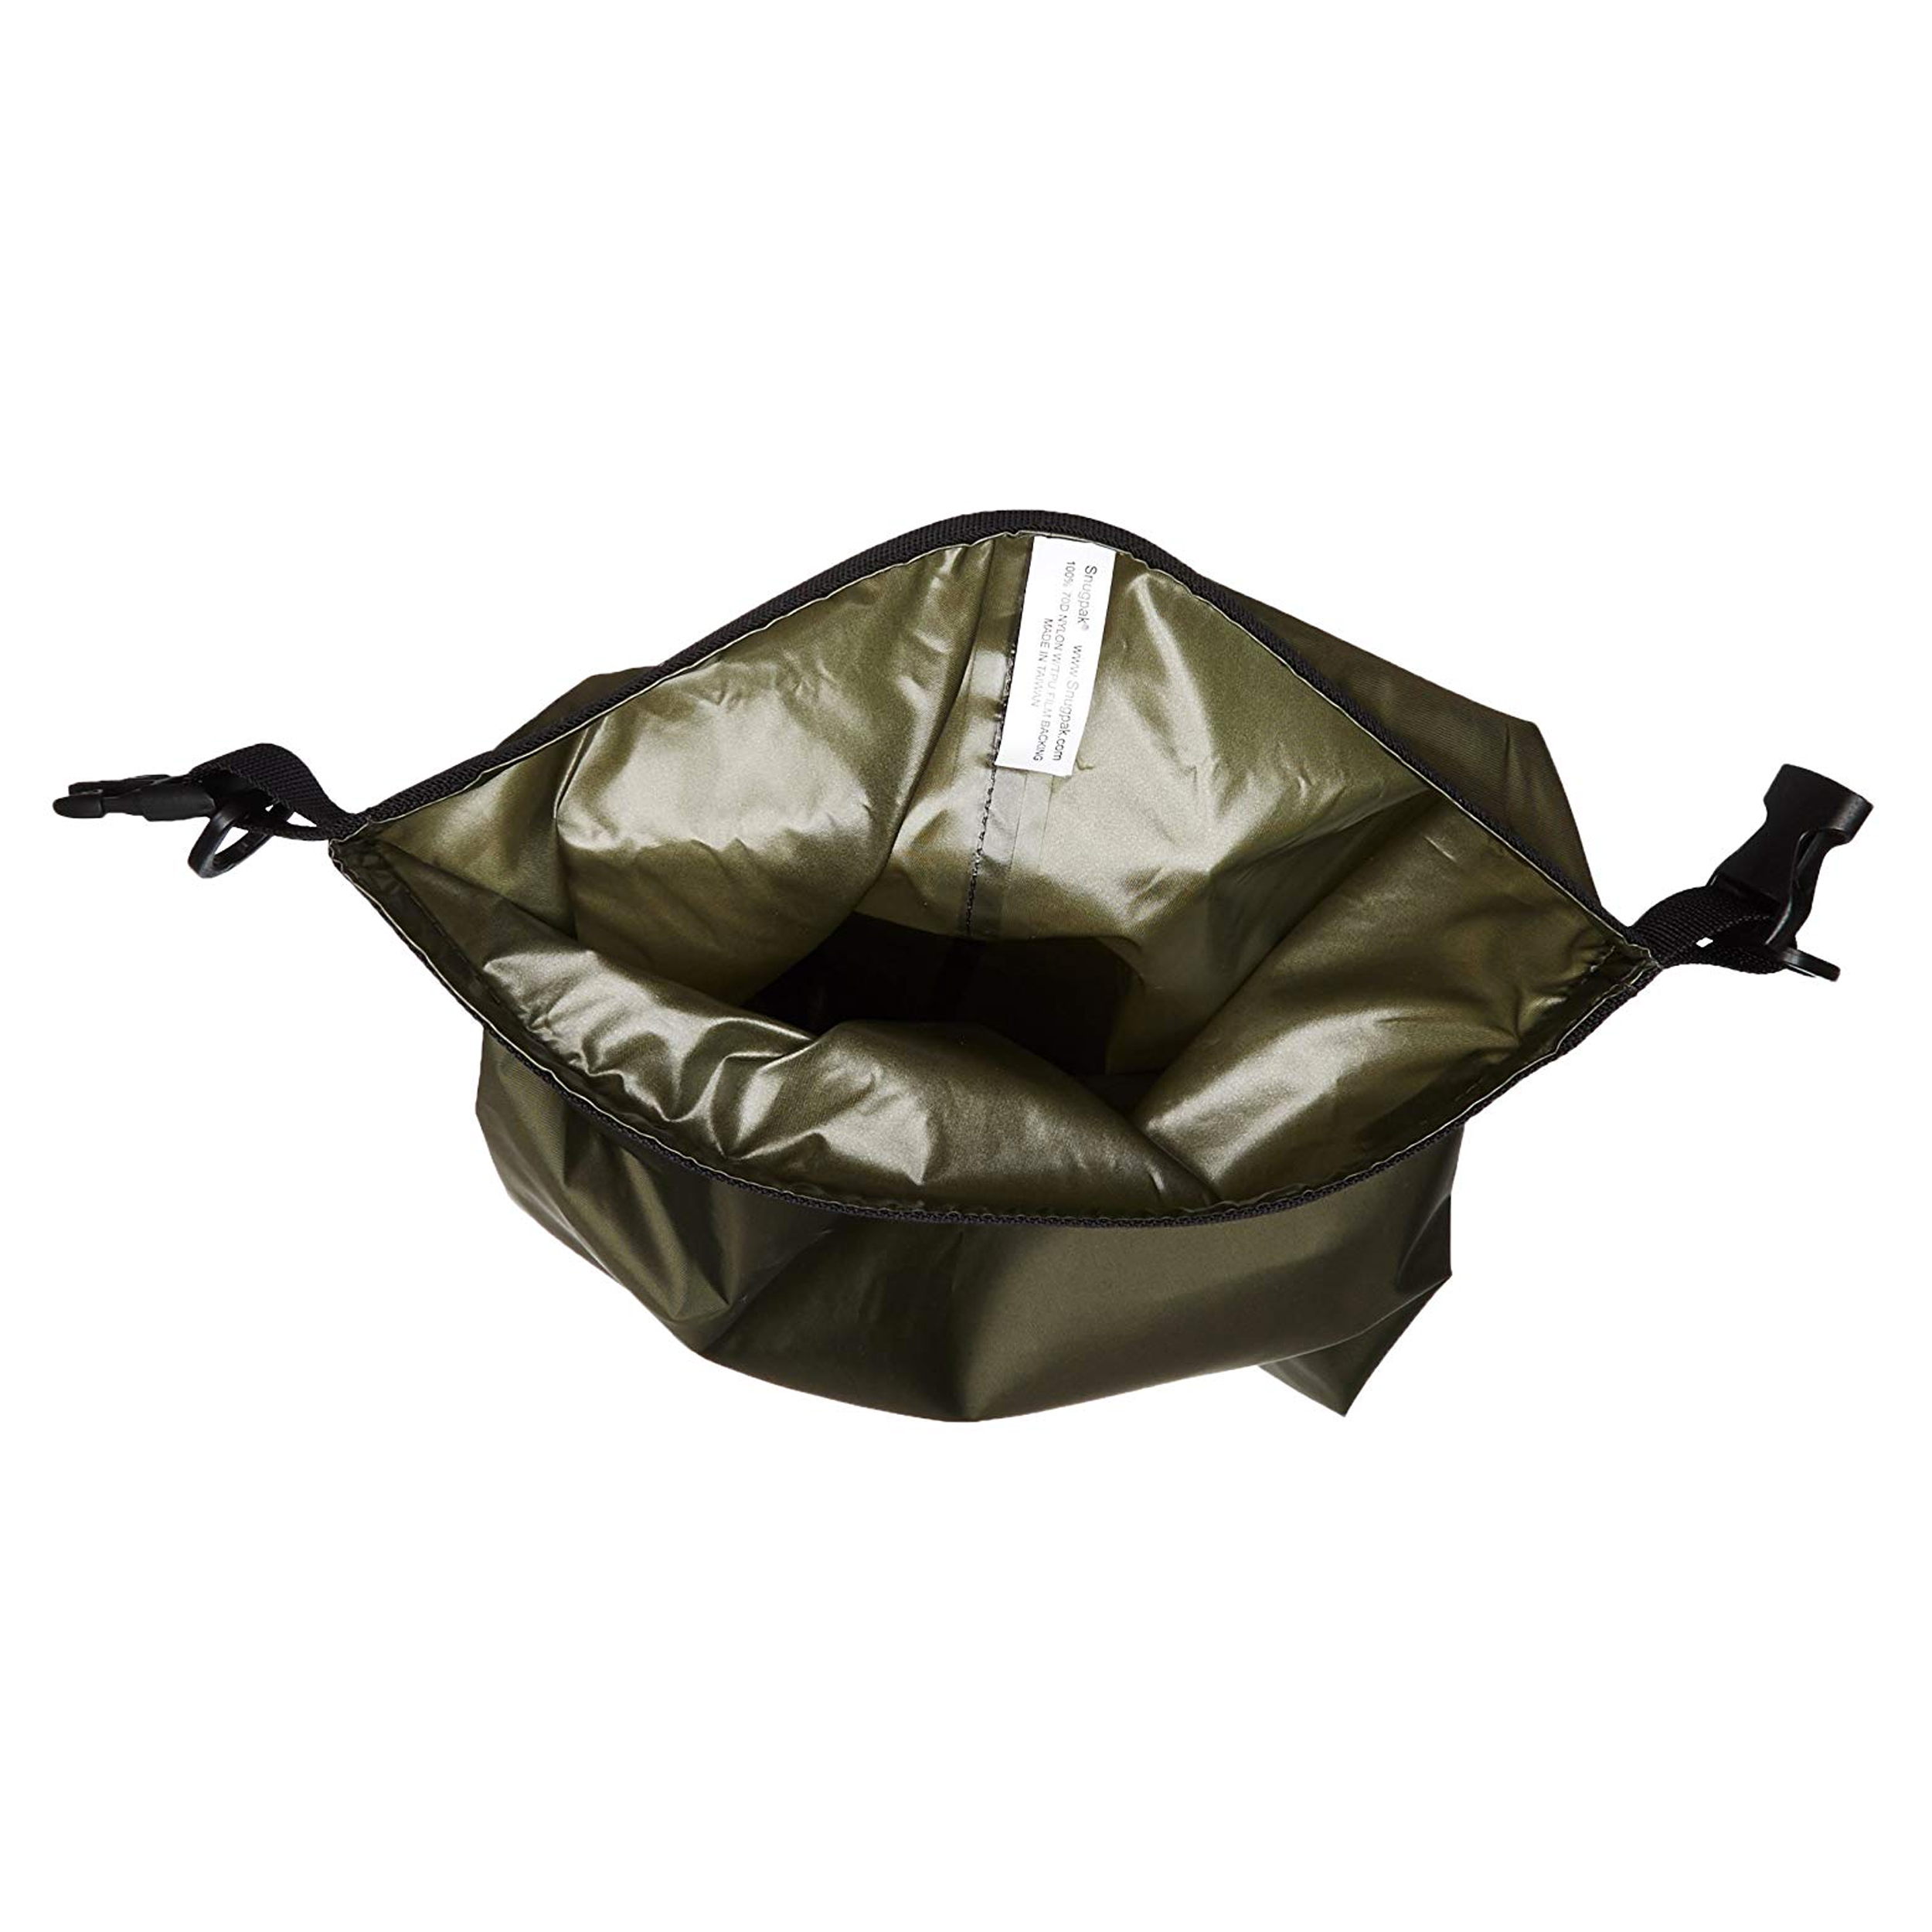 Proforce Equipment Sleeping Bag Compression Sacks - image 5 of 6